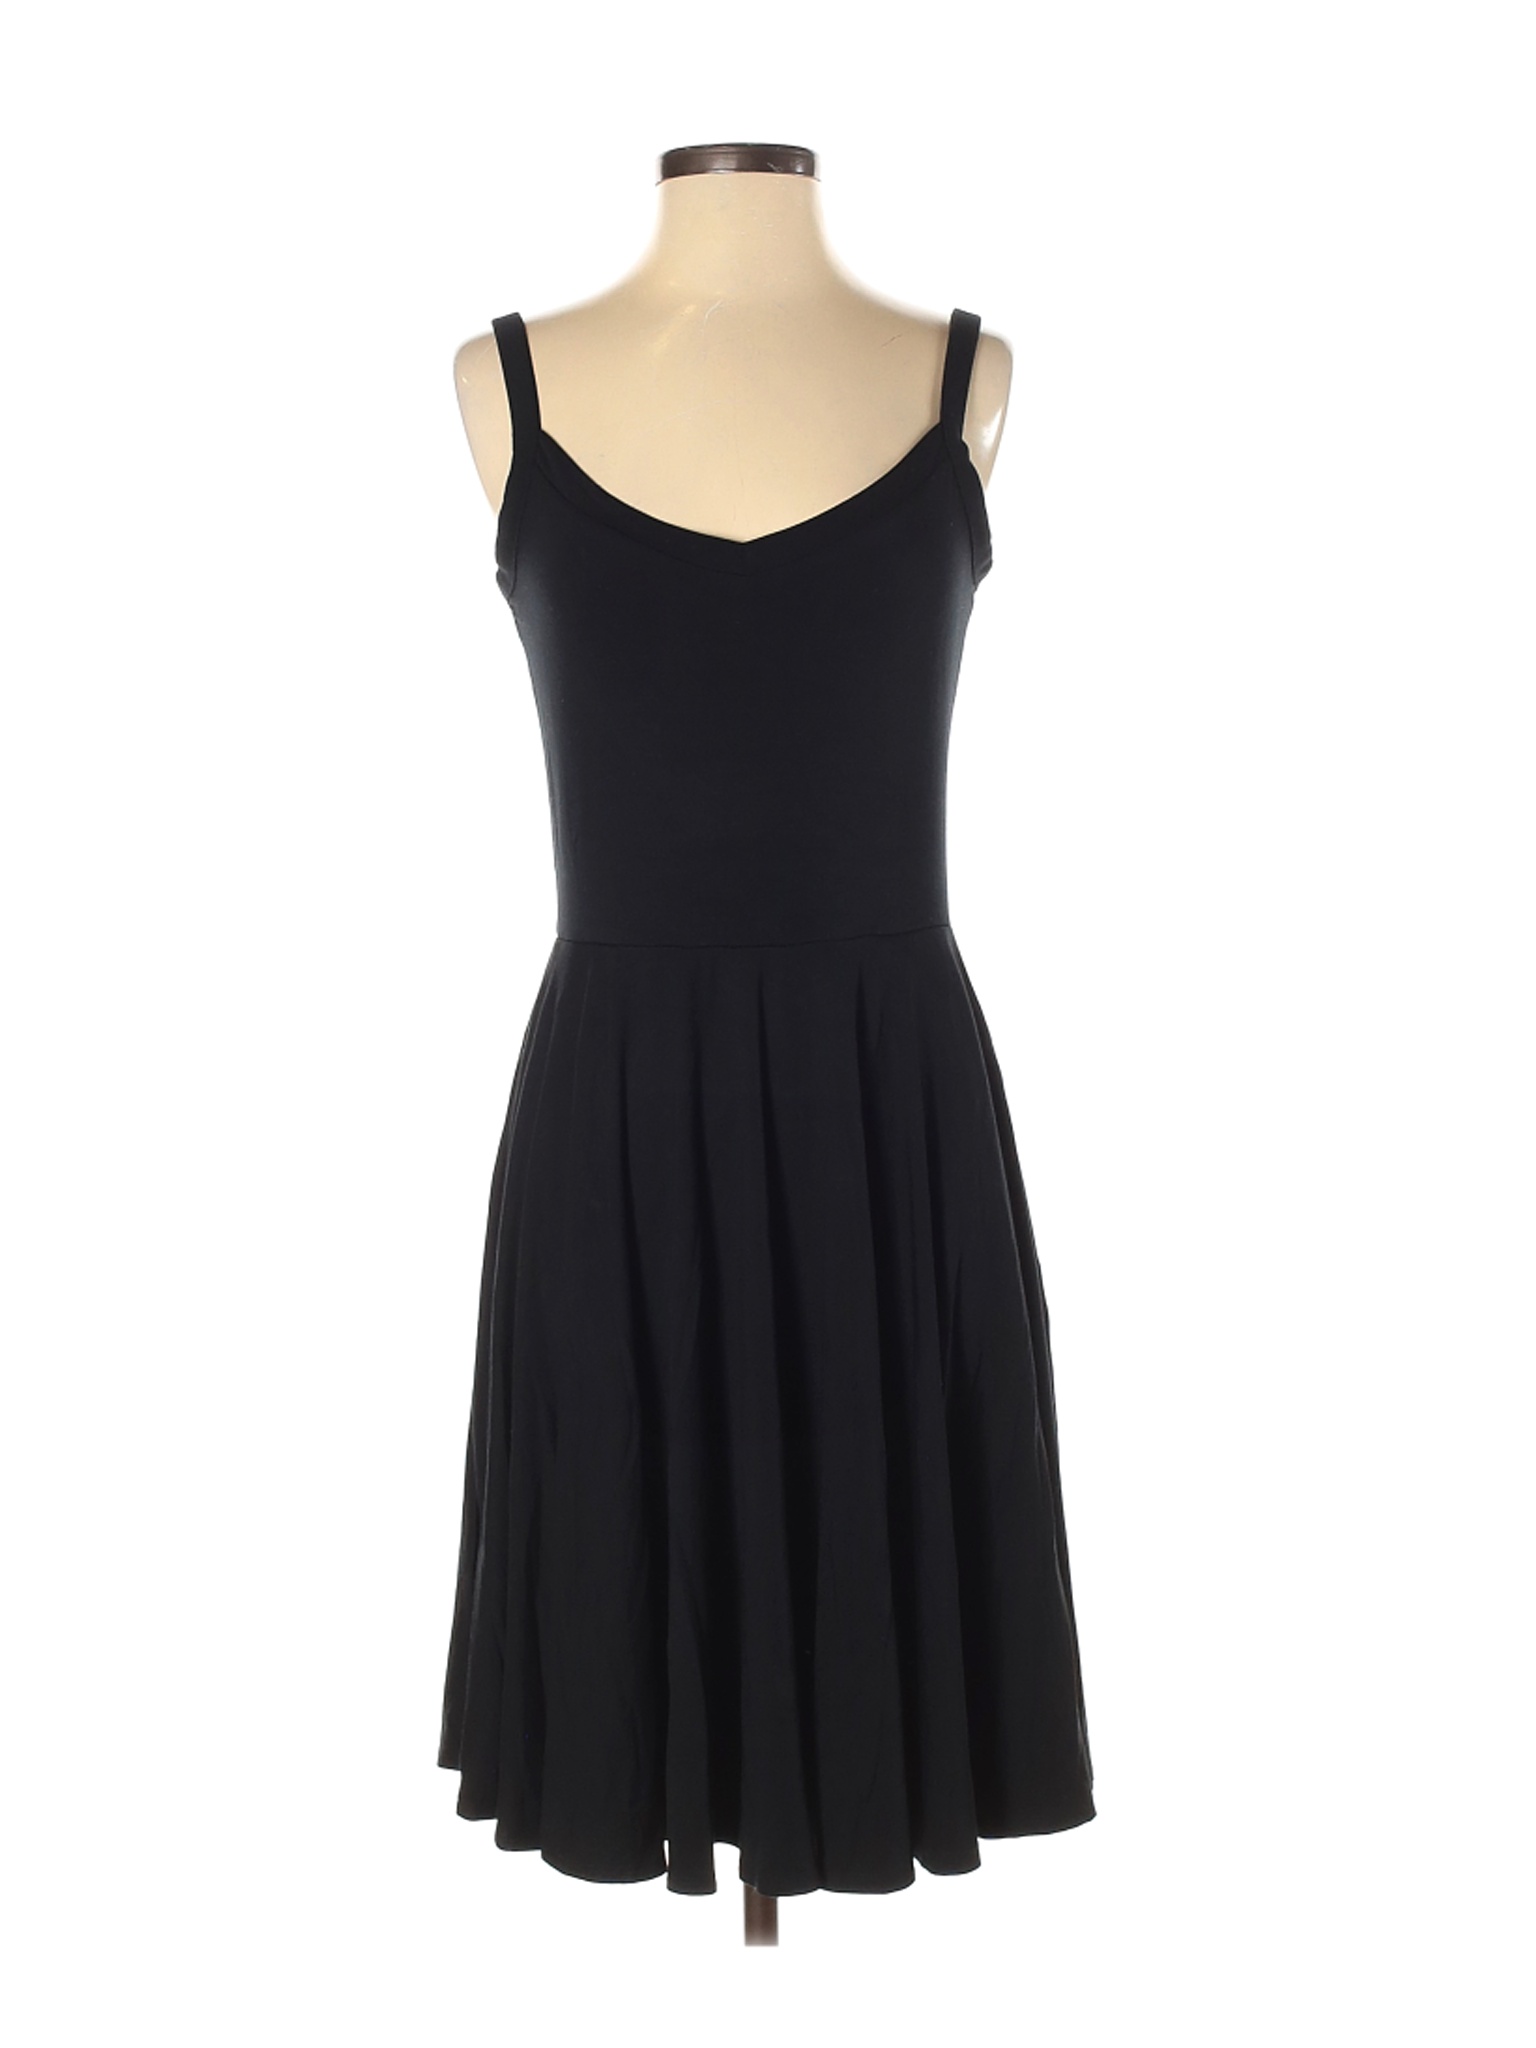 Paraphrase Women Black Casual Dress S | eBay